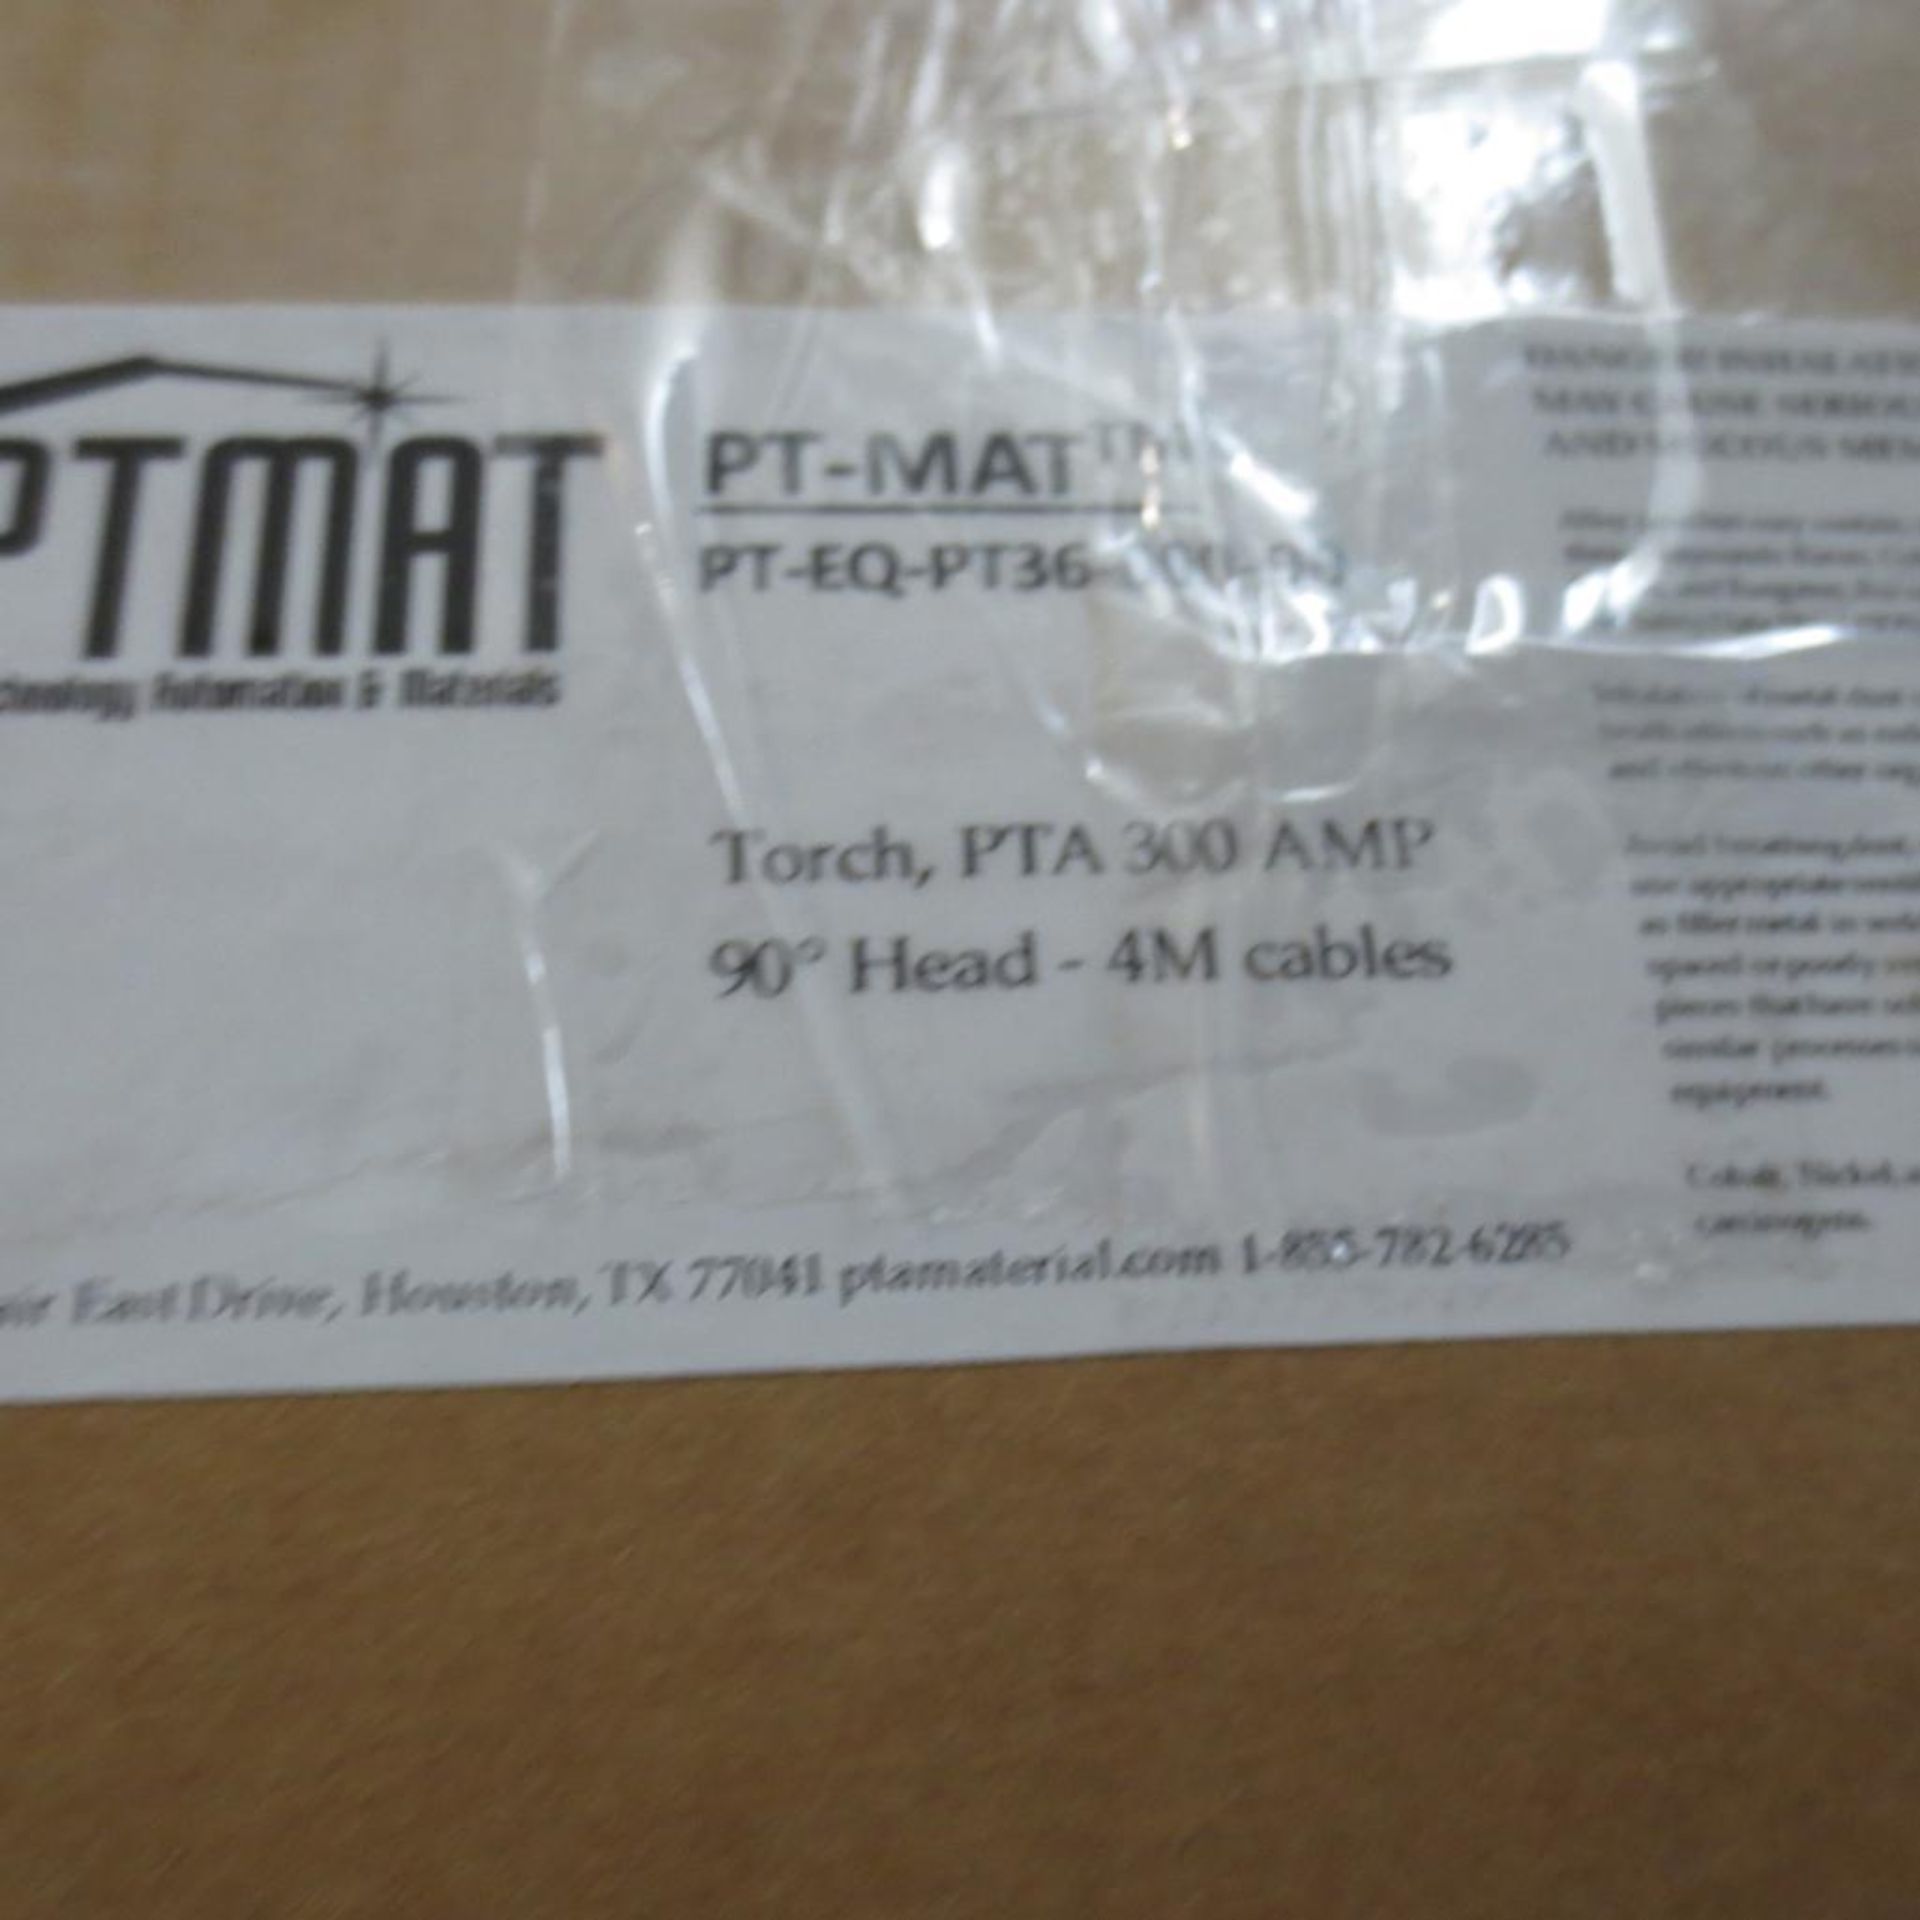 Sptmat Torch PTA 300 AMP PT-EQ-PT36-000-A - Image 2 of 2